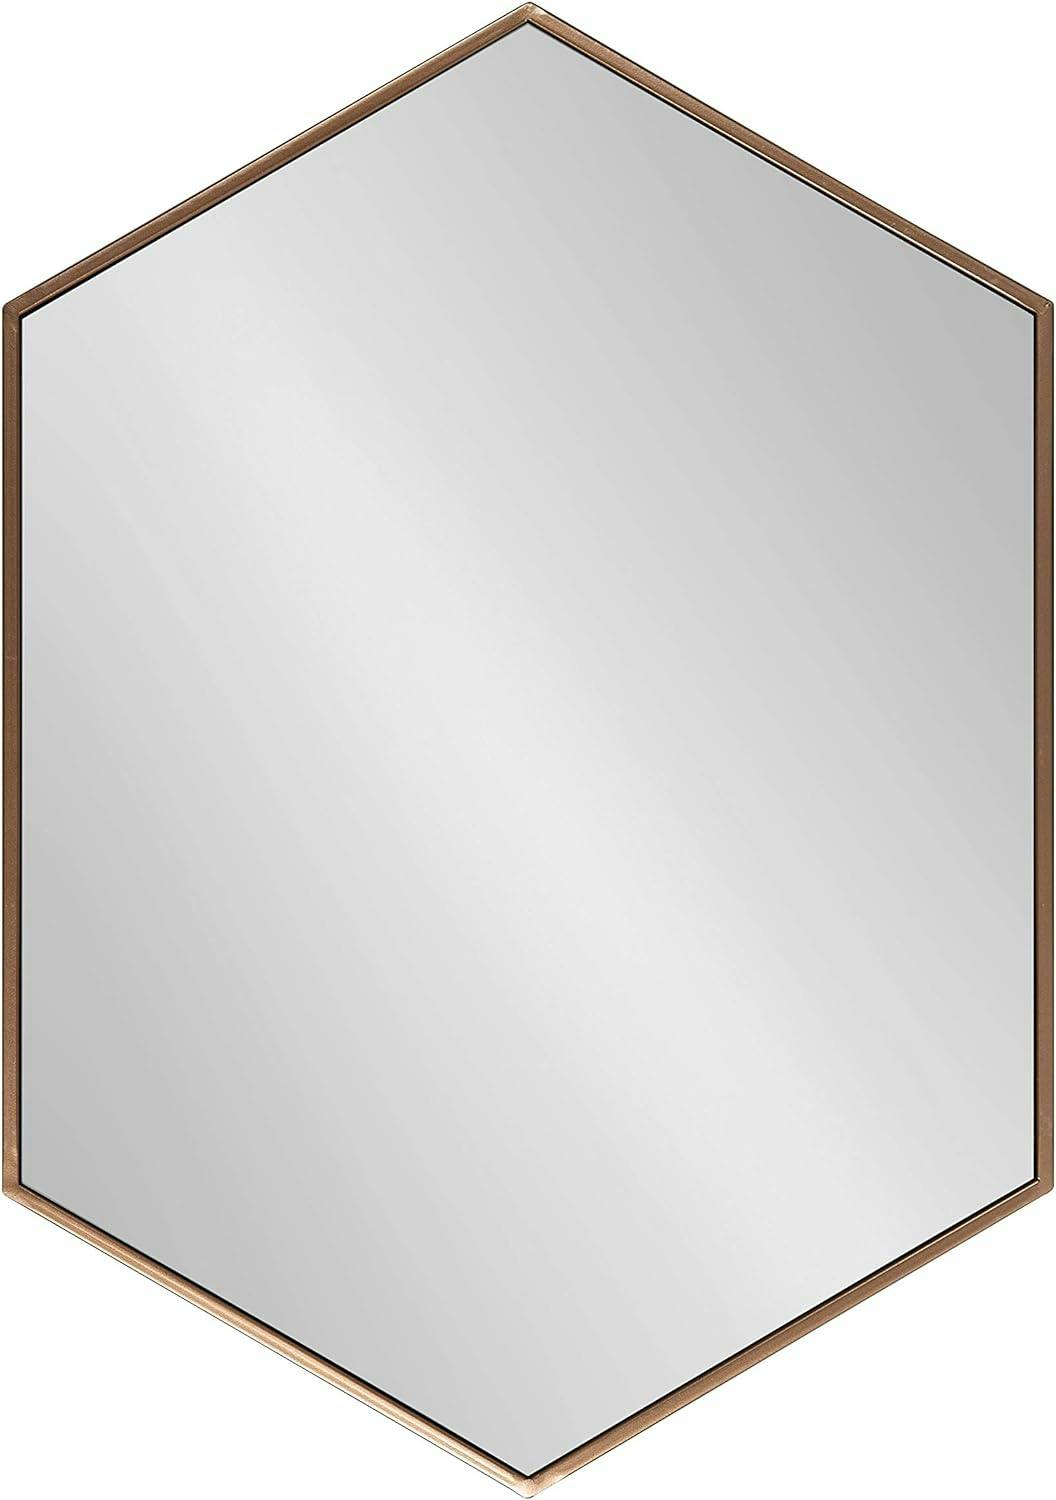 Geometric Bronze Hexagon Full Length Wall Mirror 31"x22"